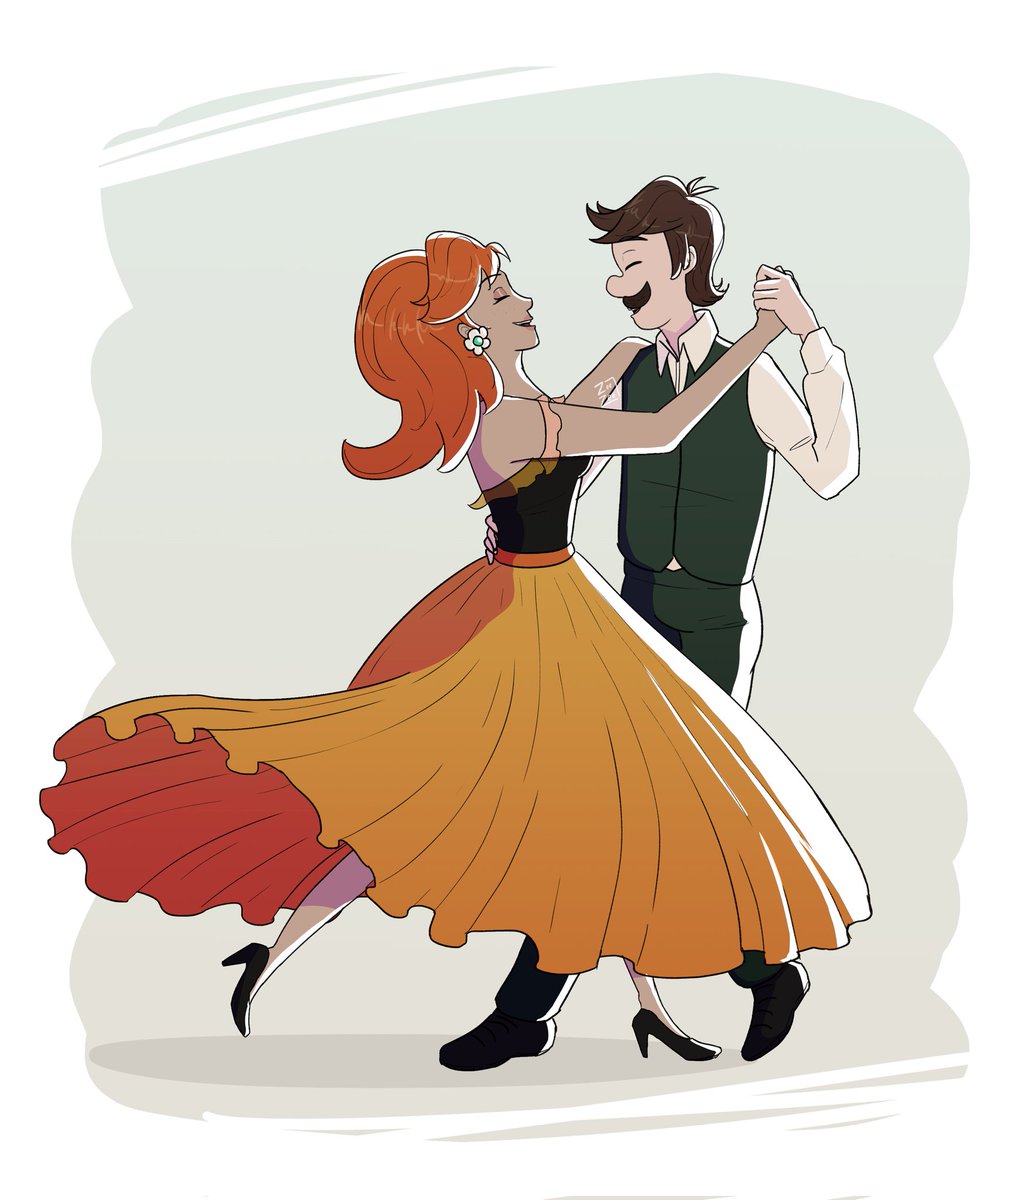 Just a dance between two lovers 🧡💚

#PrincessDaisy #Luigi #luaisy #SuperMarioBros #Mariobros #fanart